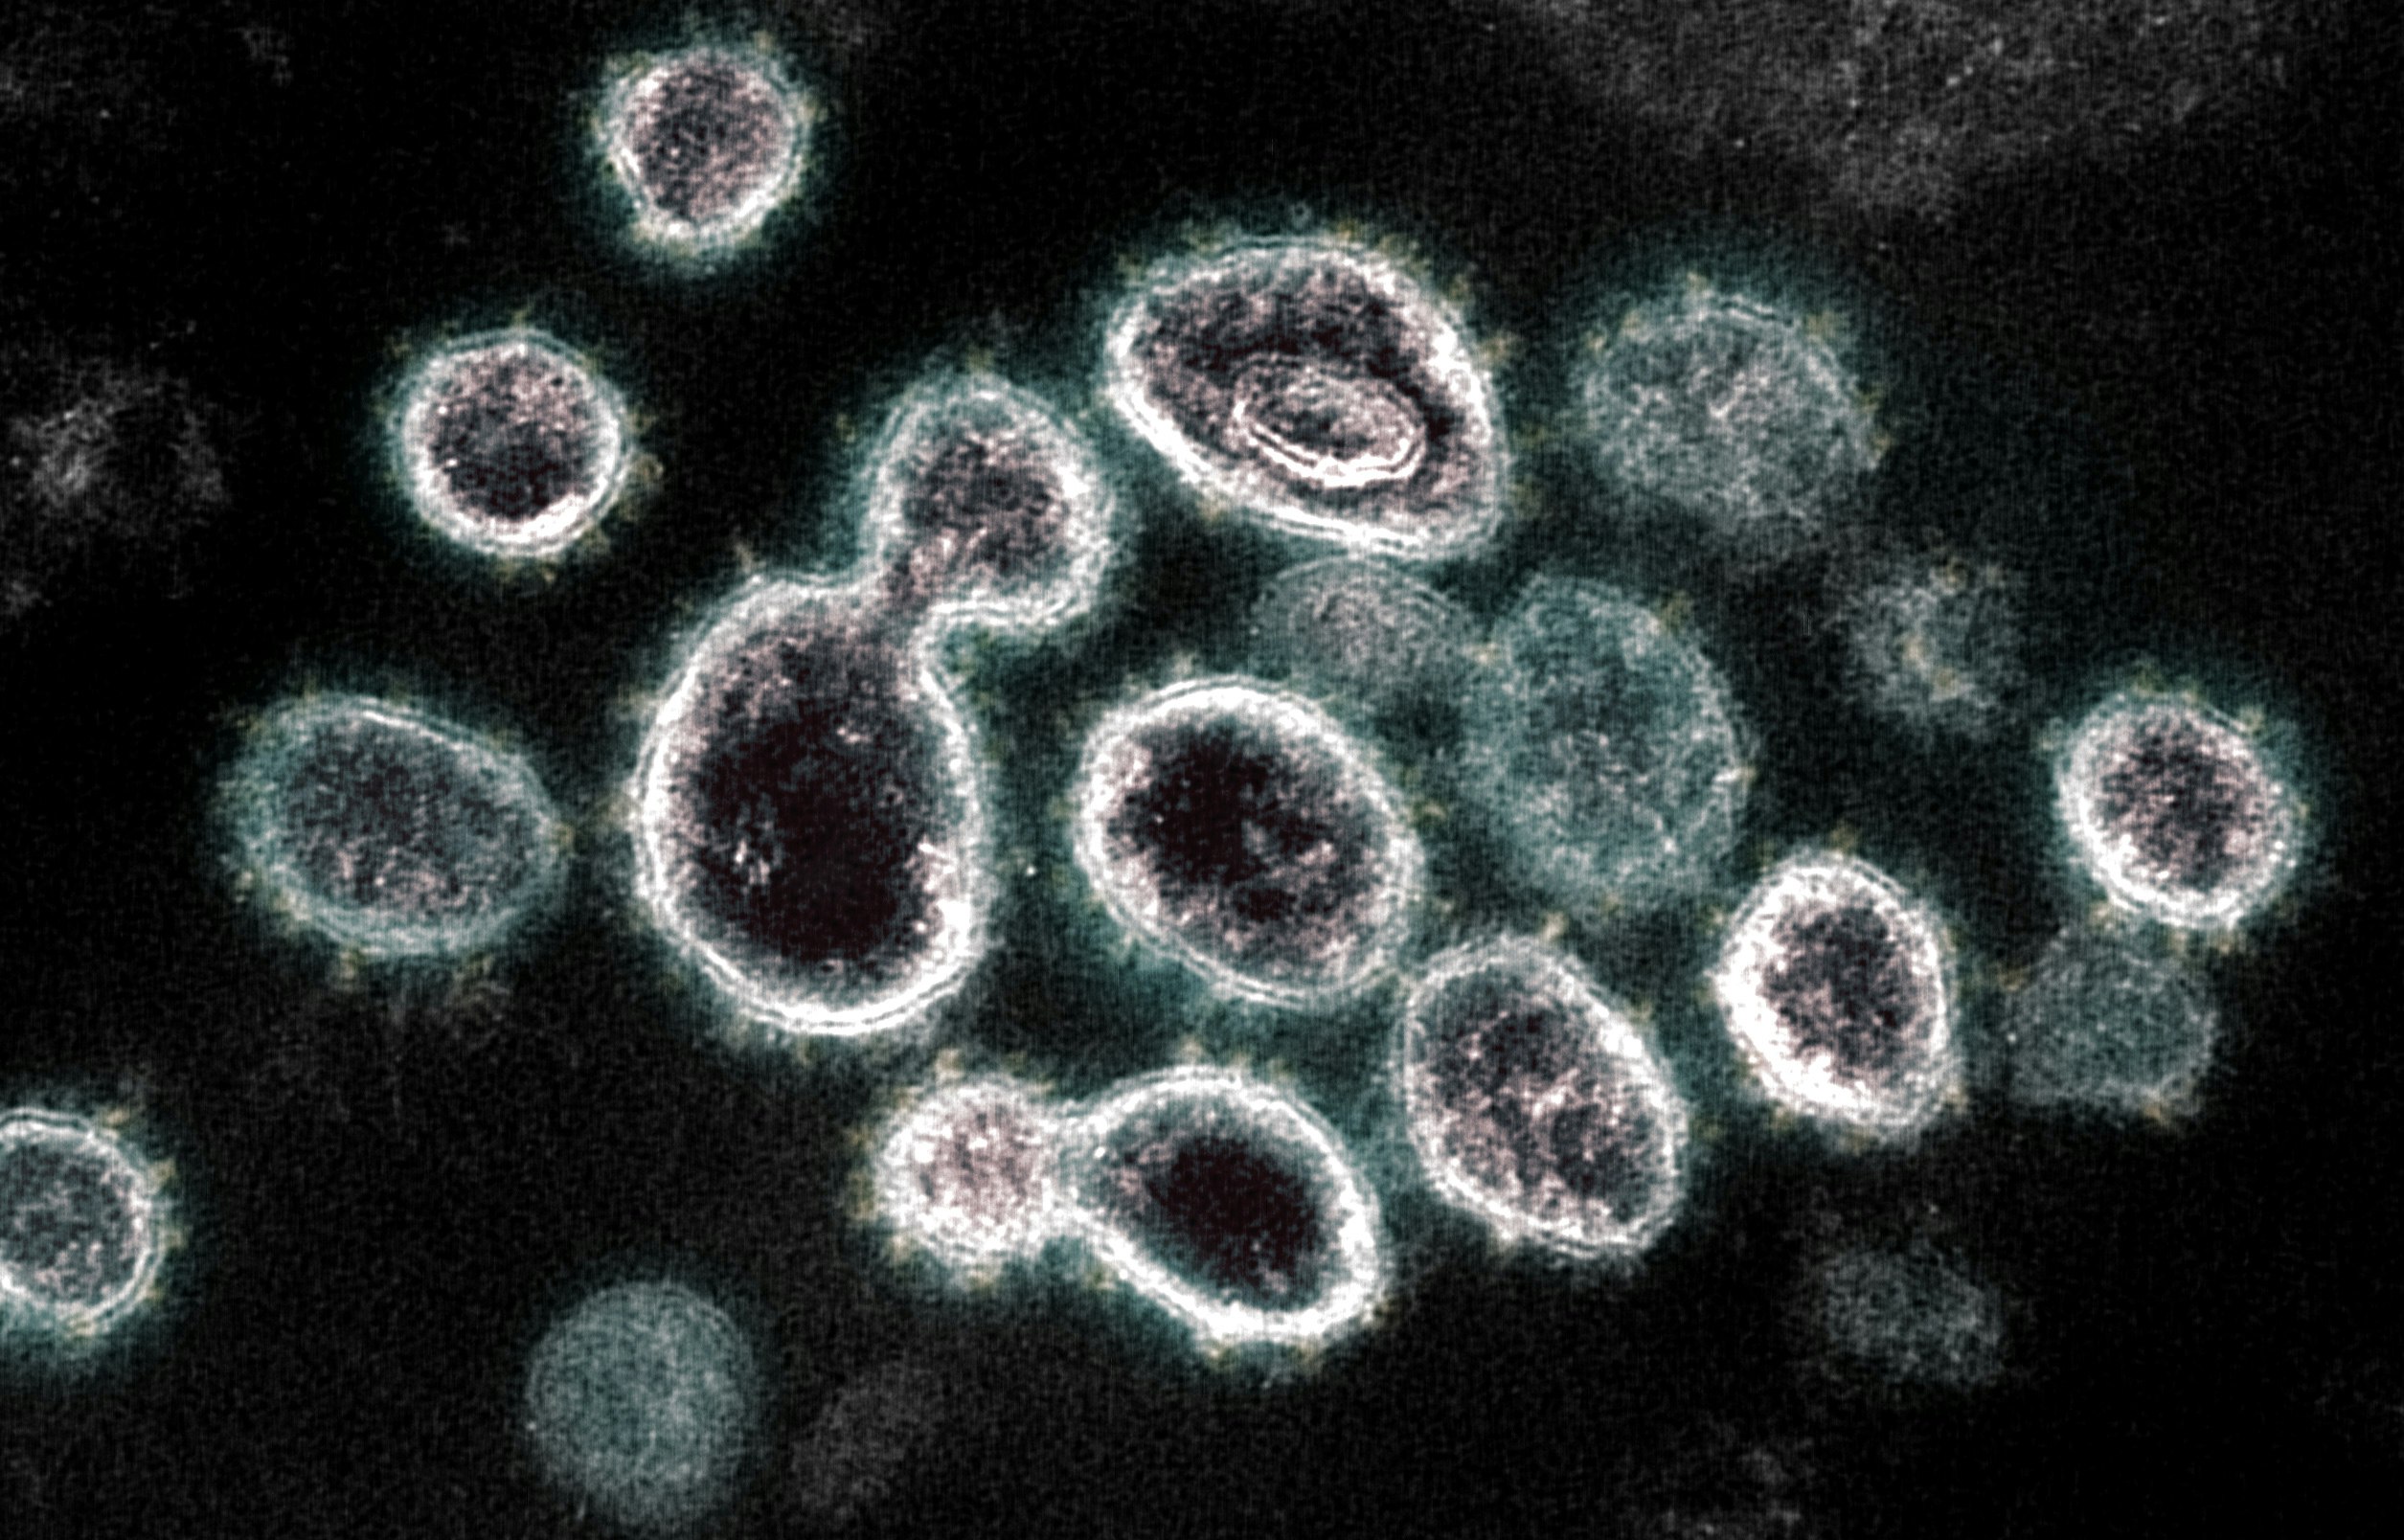 Transmission Electron Microscope image of SARS COV 2 virus